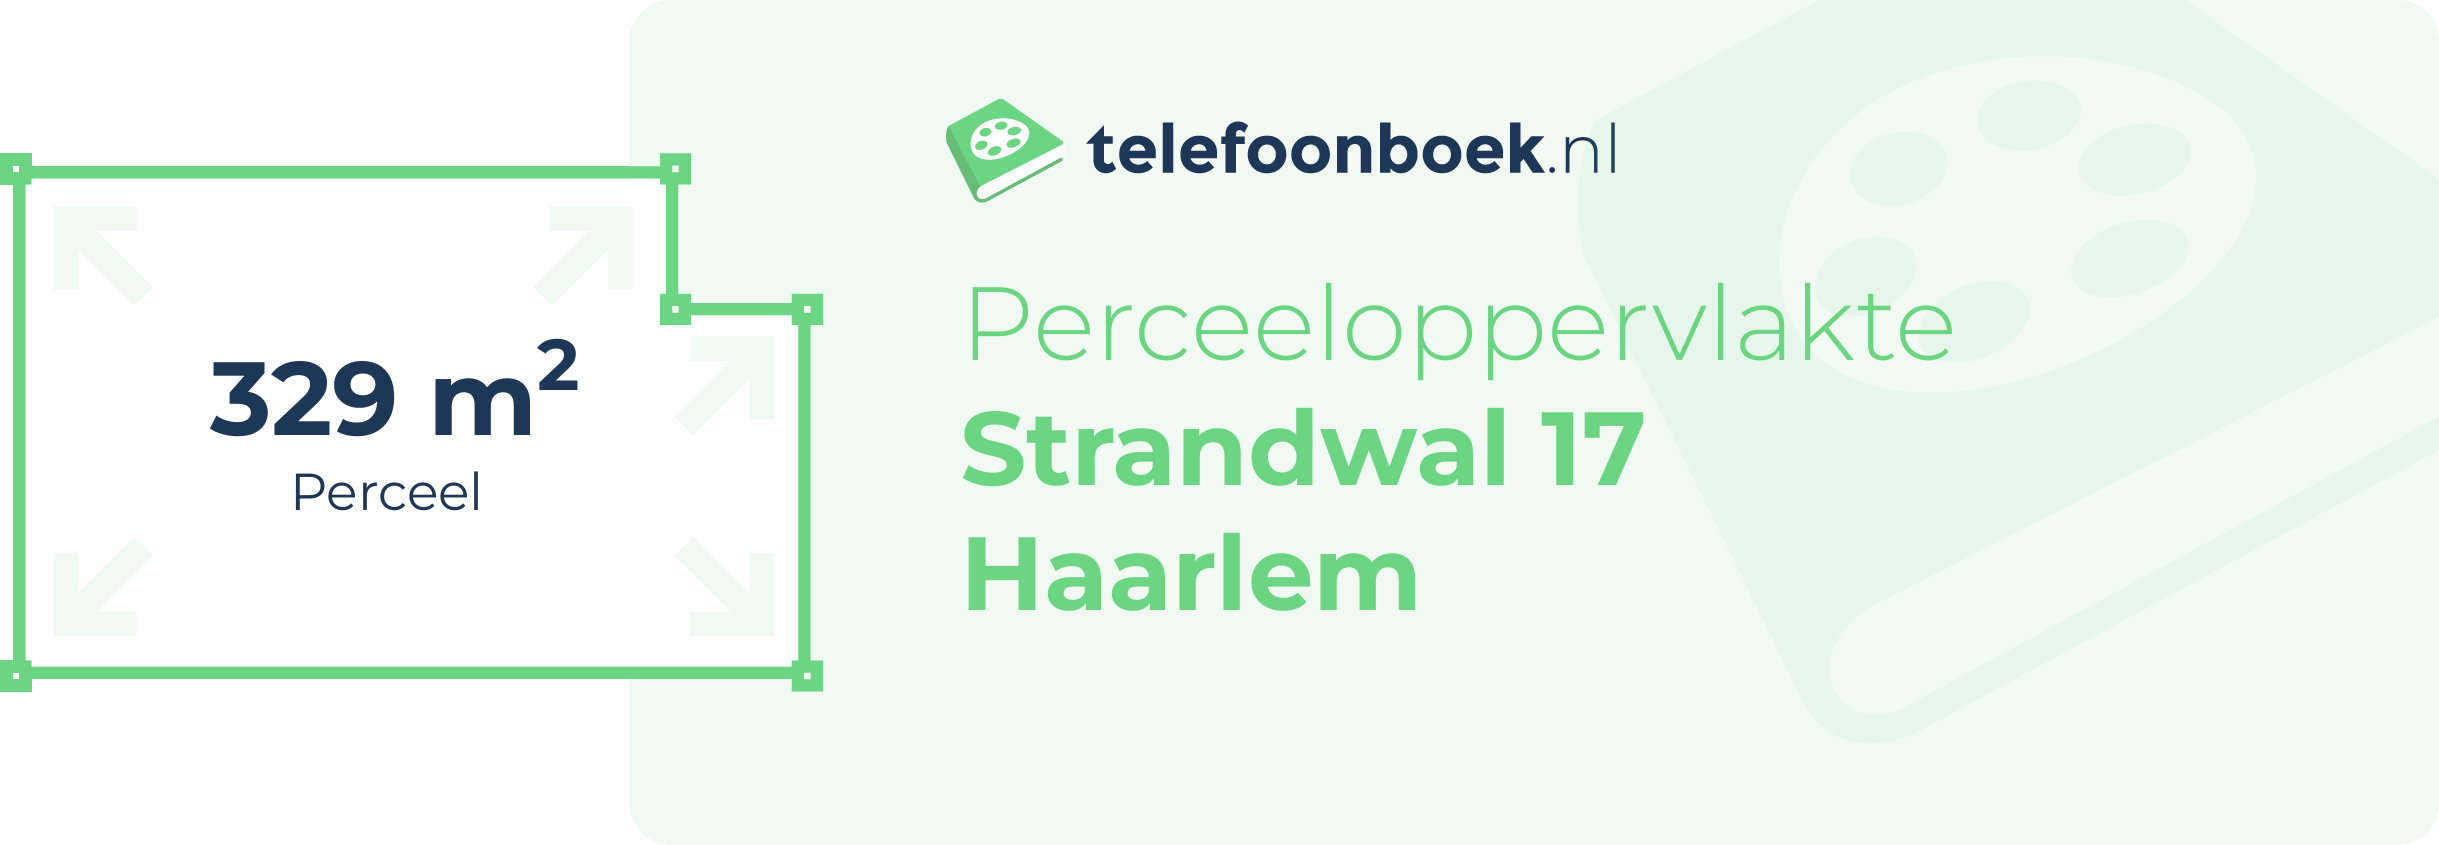 Perceeloppervlakte Strandwal 17 Haarlem